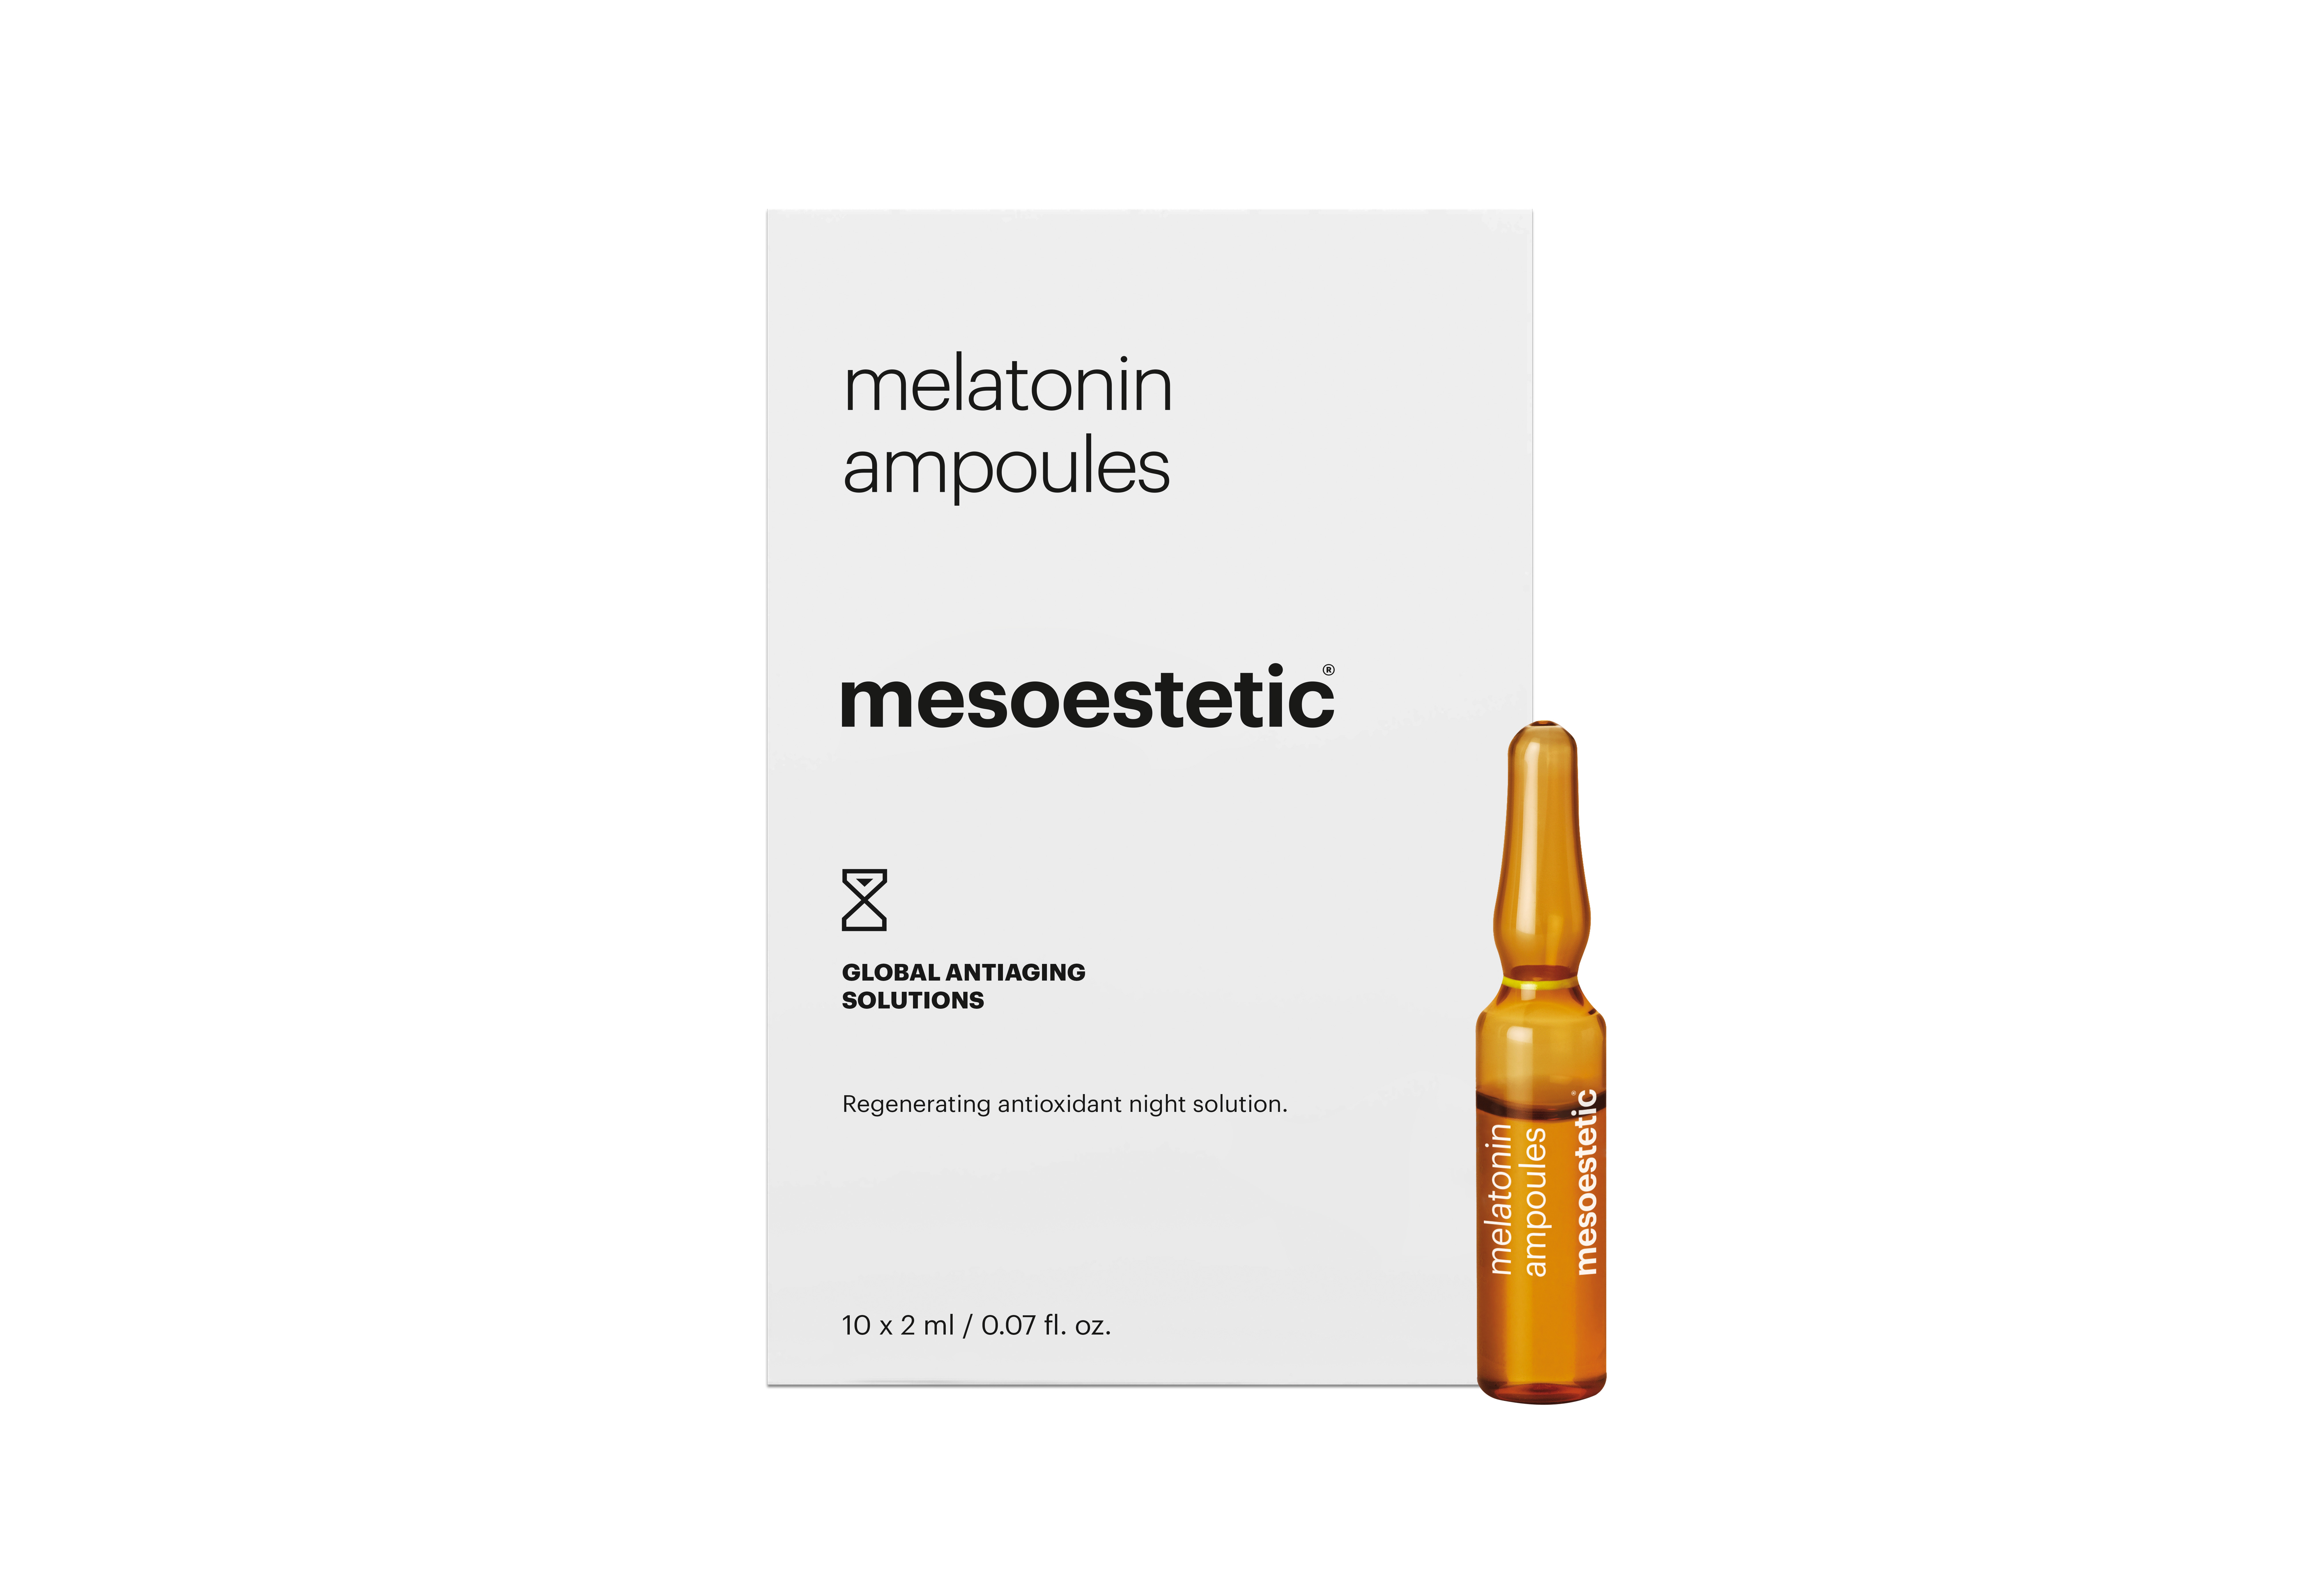 1) Melatonin ampoules_Product